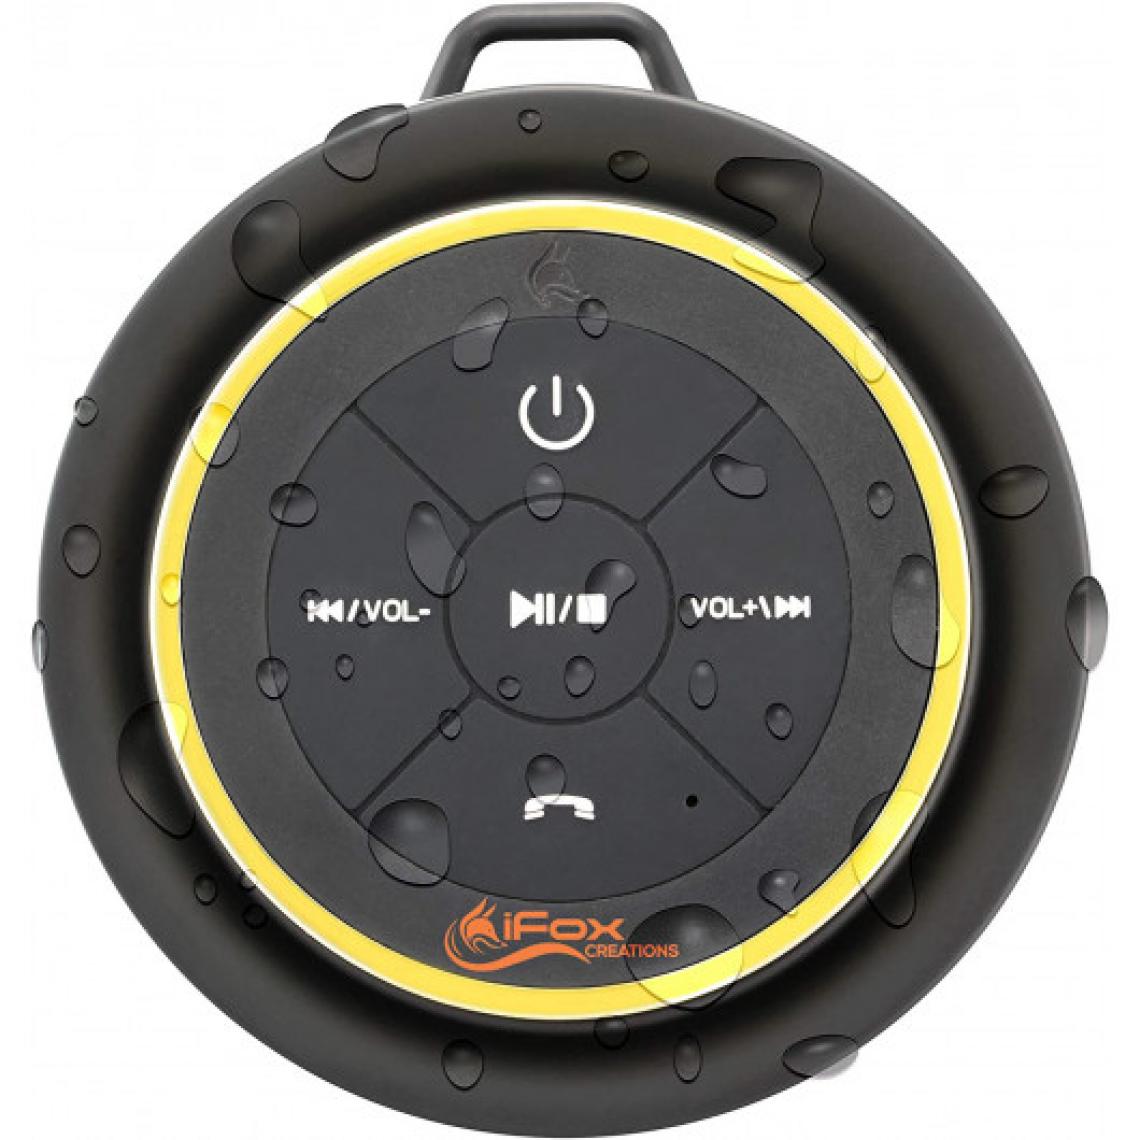 Ofs Selection - iFox iF012, un haut-parleur waterproof portable - Enceintes Hifi